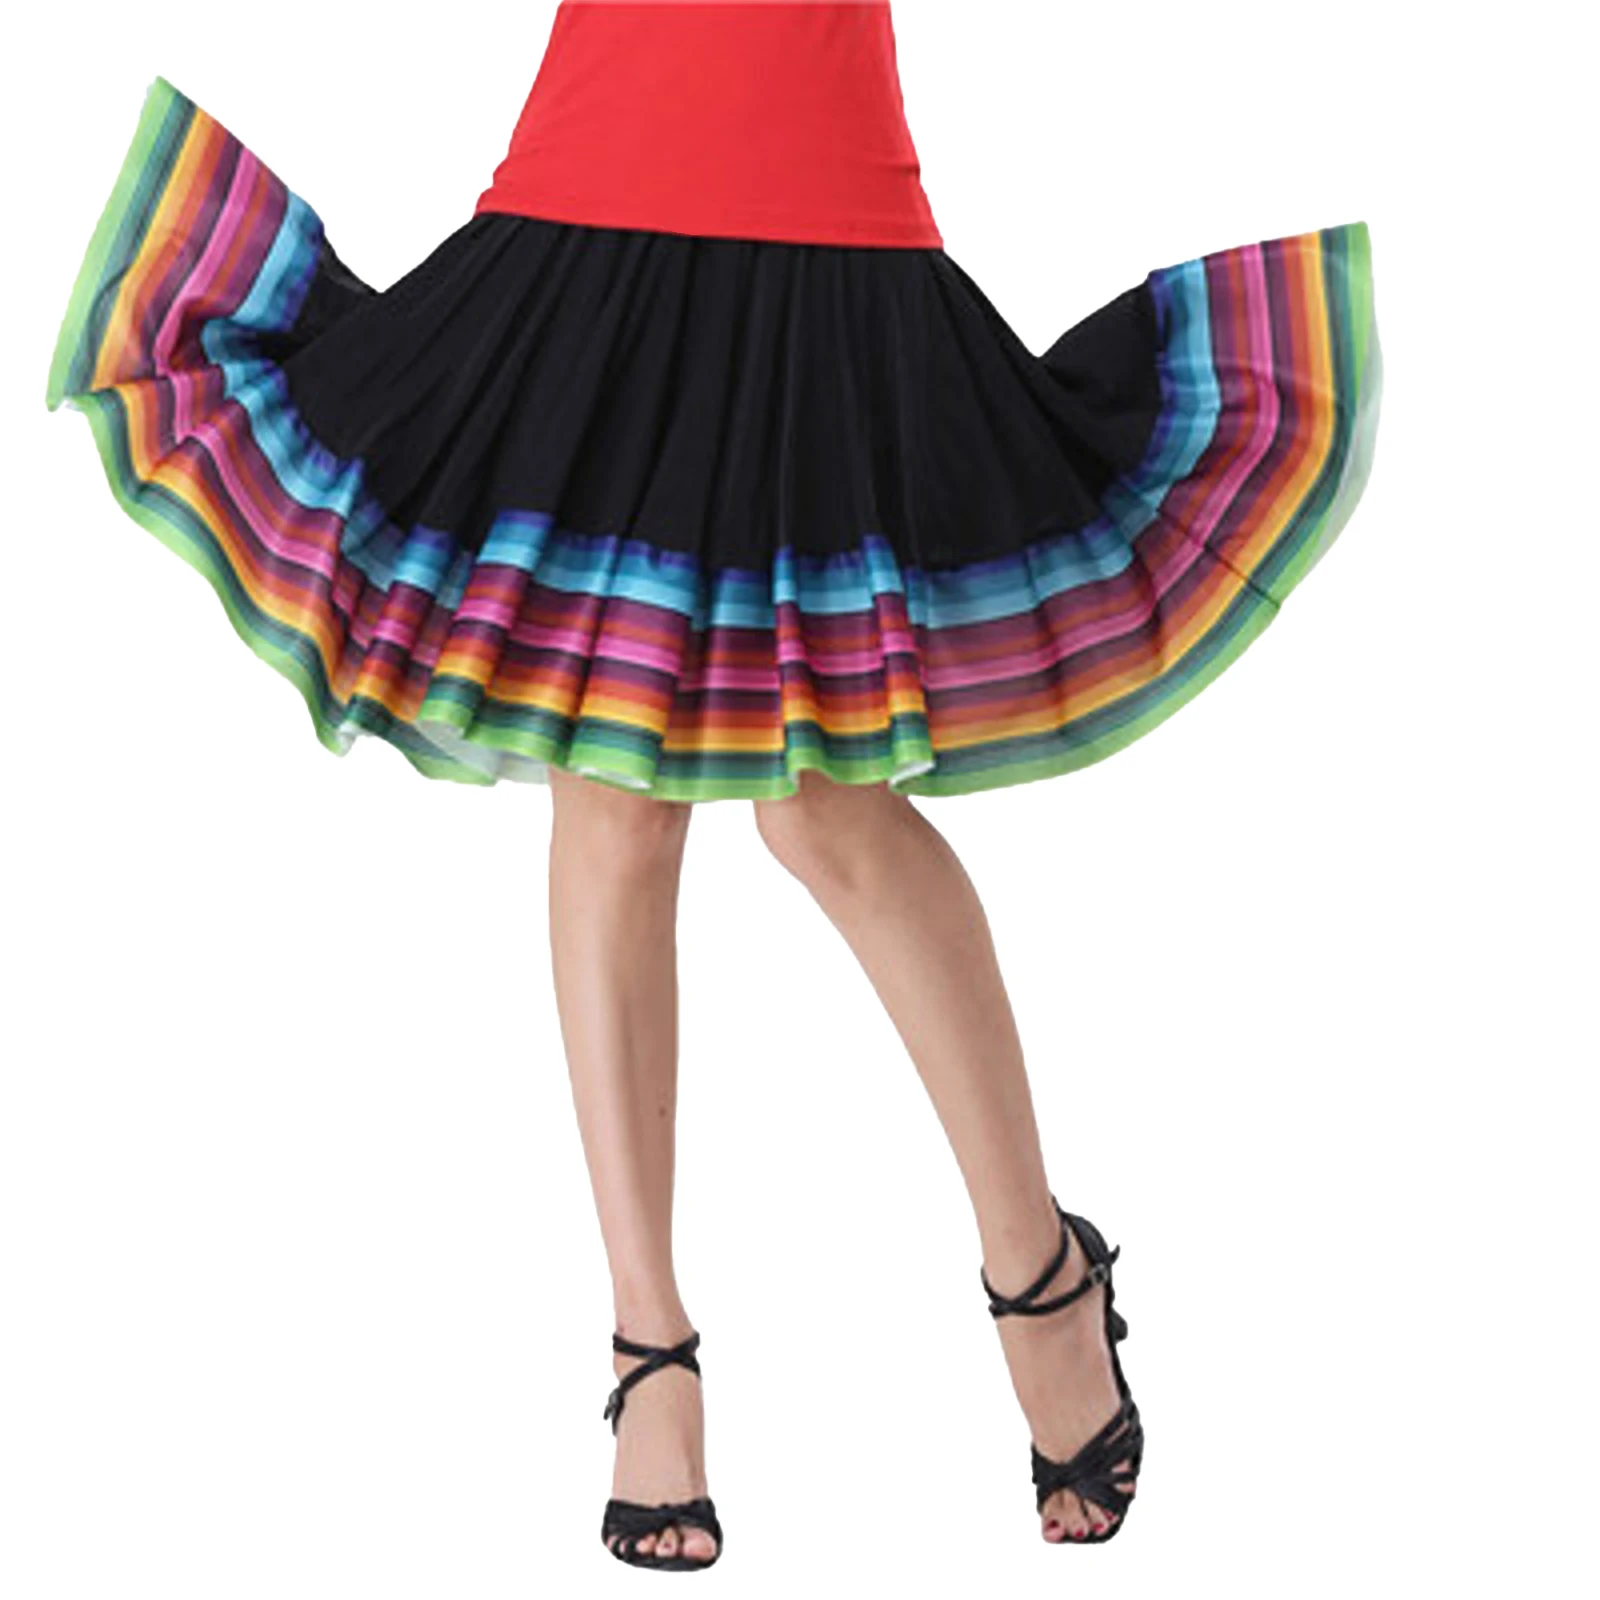 Womens Folklorico Dance Skirts Full Circle Spanish Folkloric Mexican Flamenco Folk Dance Stage Performance Costume Swing Skirt